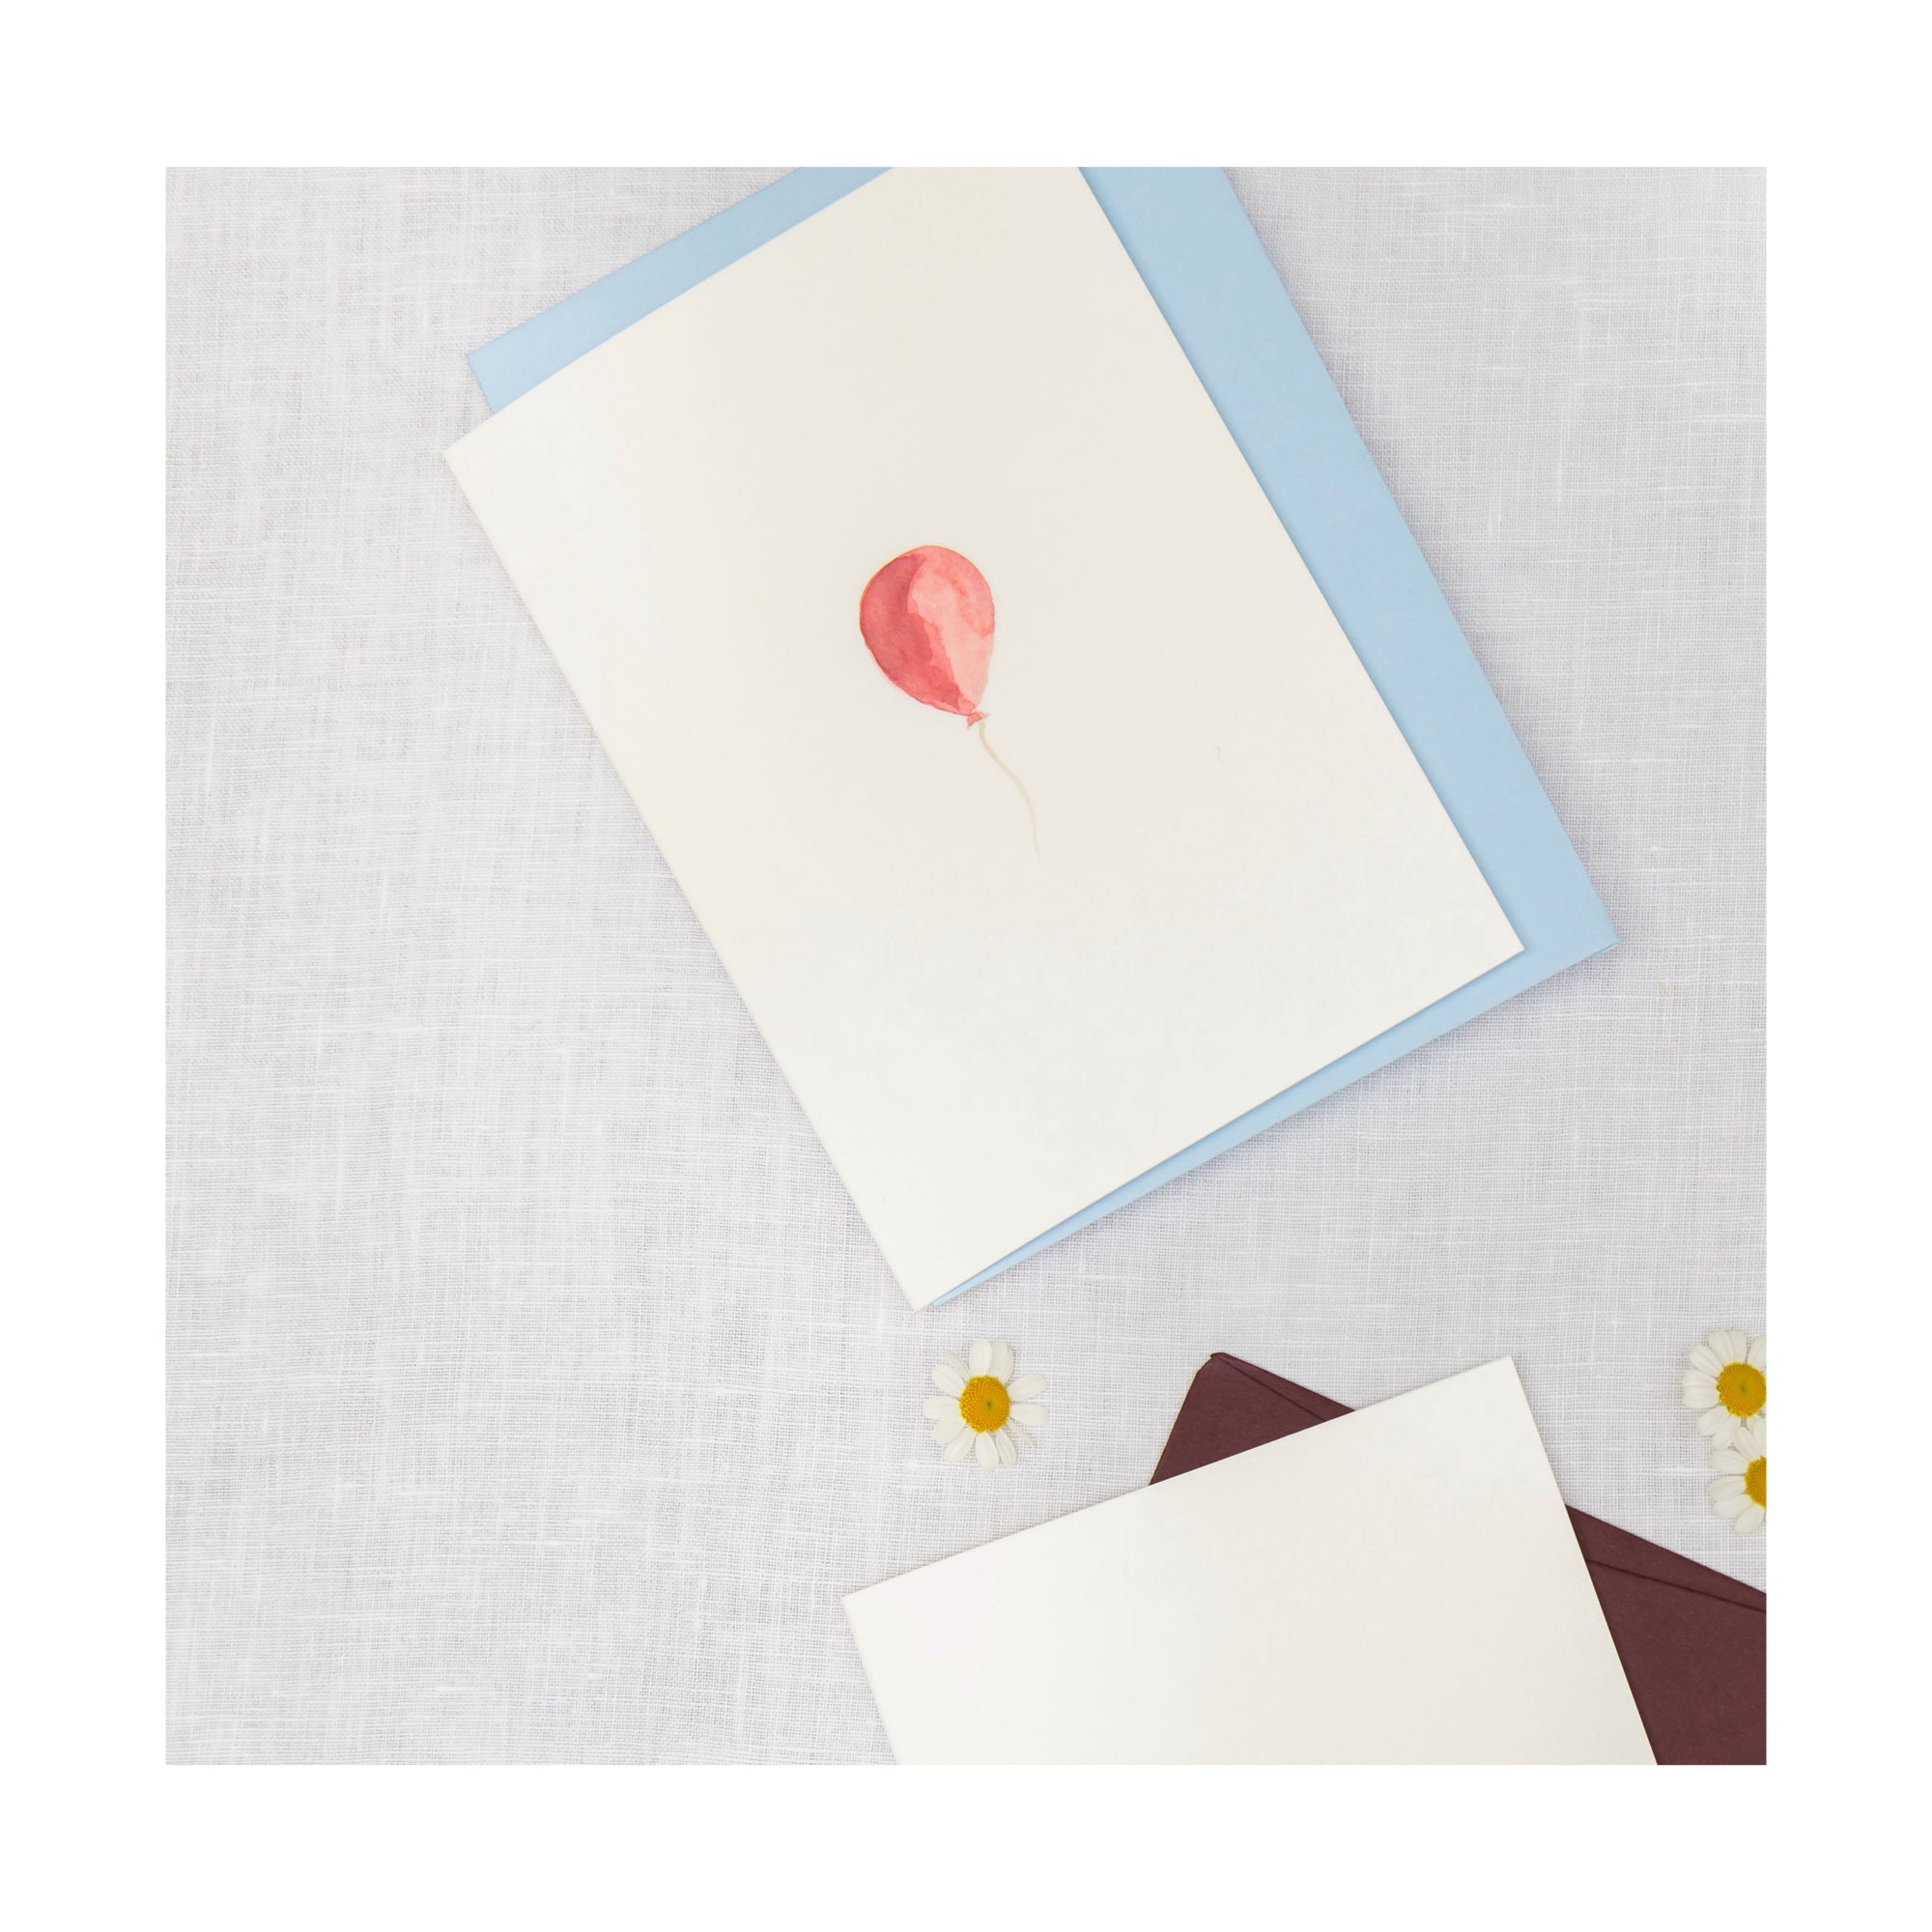 Balloon greetings card by Memo Press